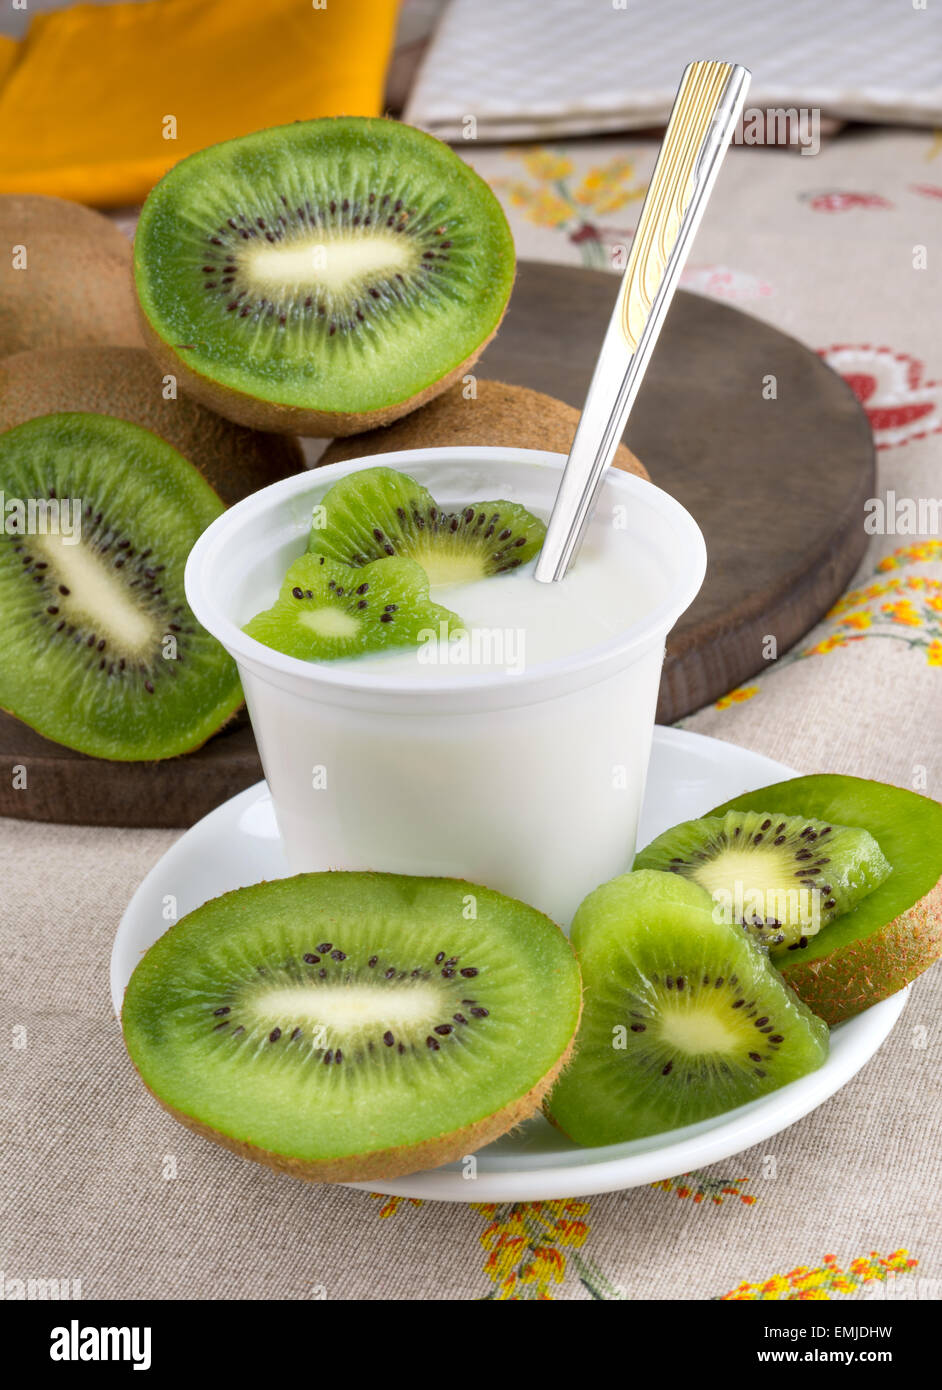 Kiwi joghurt -Fotos und -Bildmaterial in hoher Auflösung – Alamy